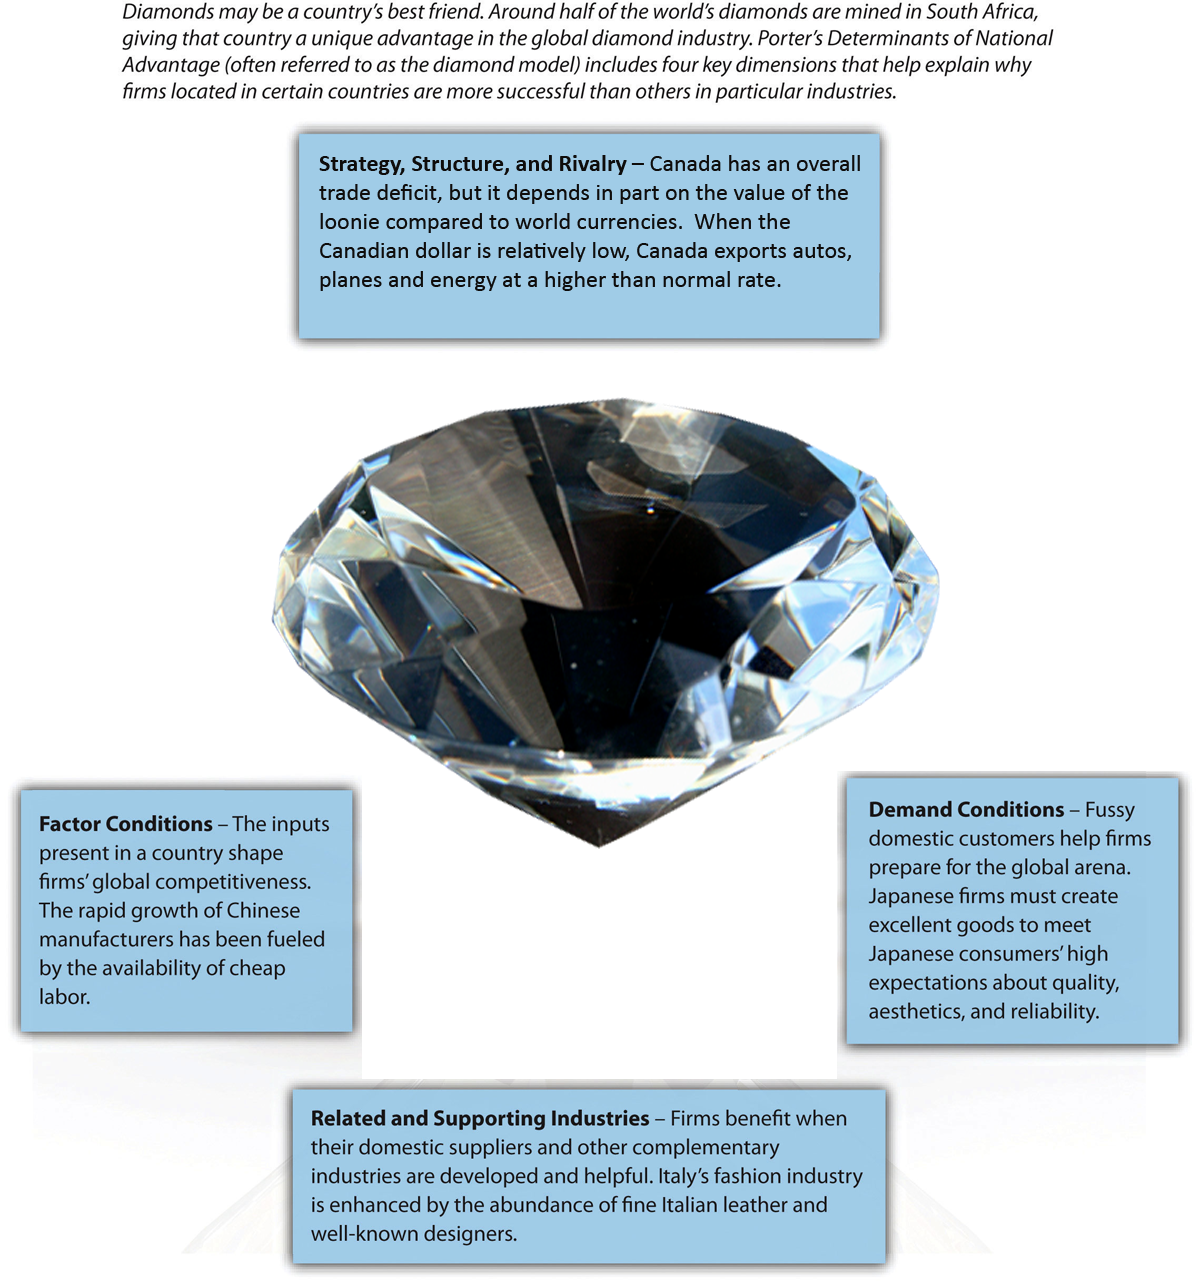 Figure 7-14: Diamond Model of National Advantage, image description available